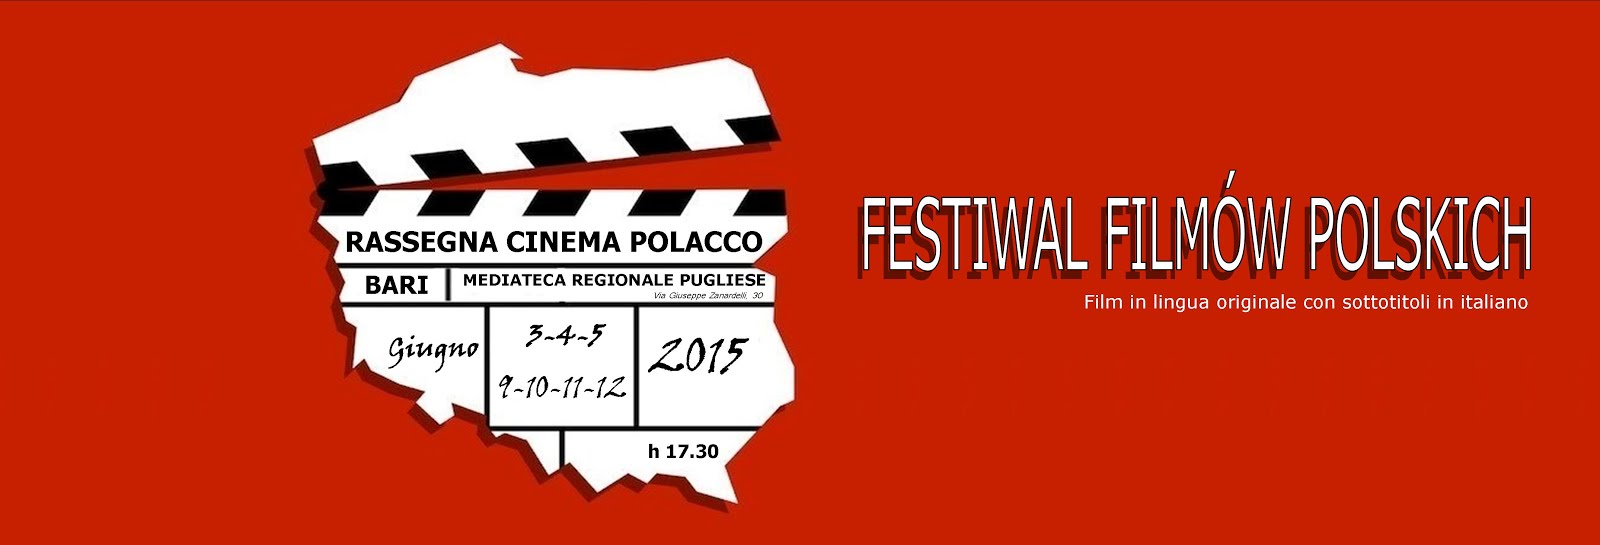 Rassegna Cinema Polacco